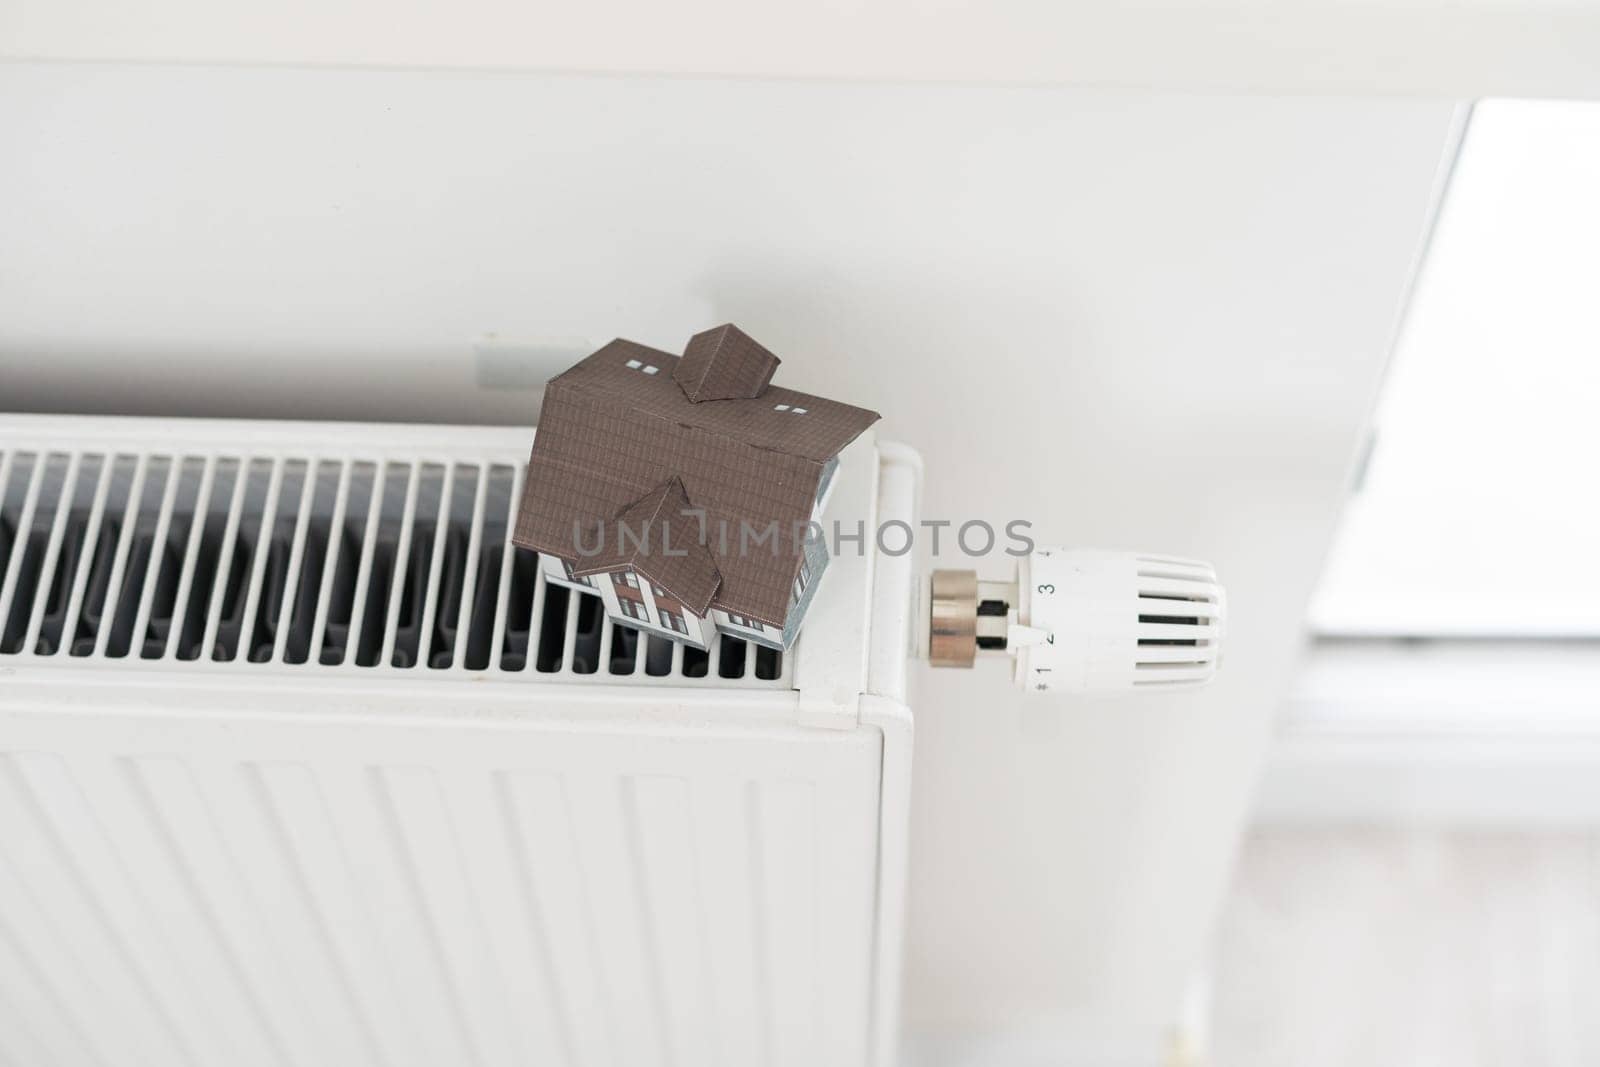 House model on the heating radiator. High quality photo